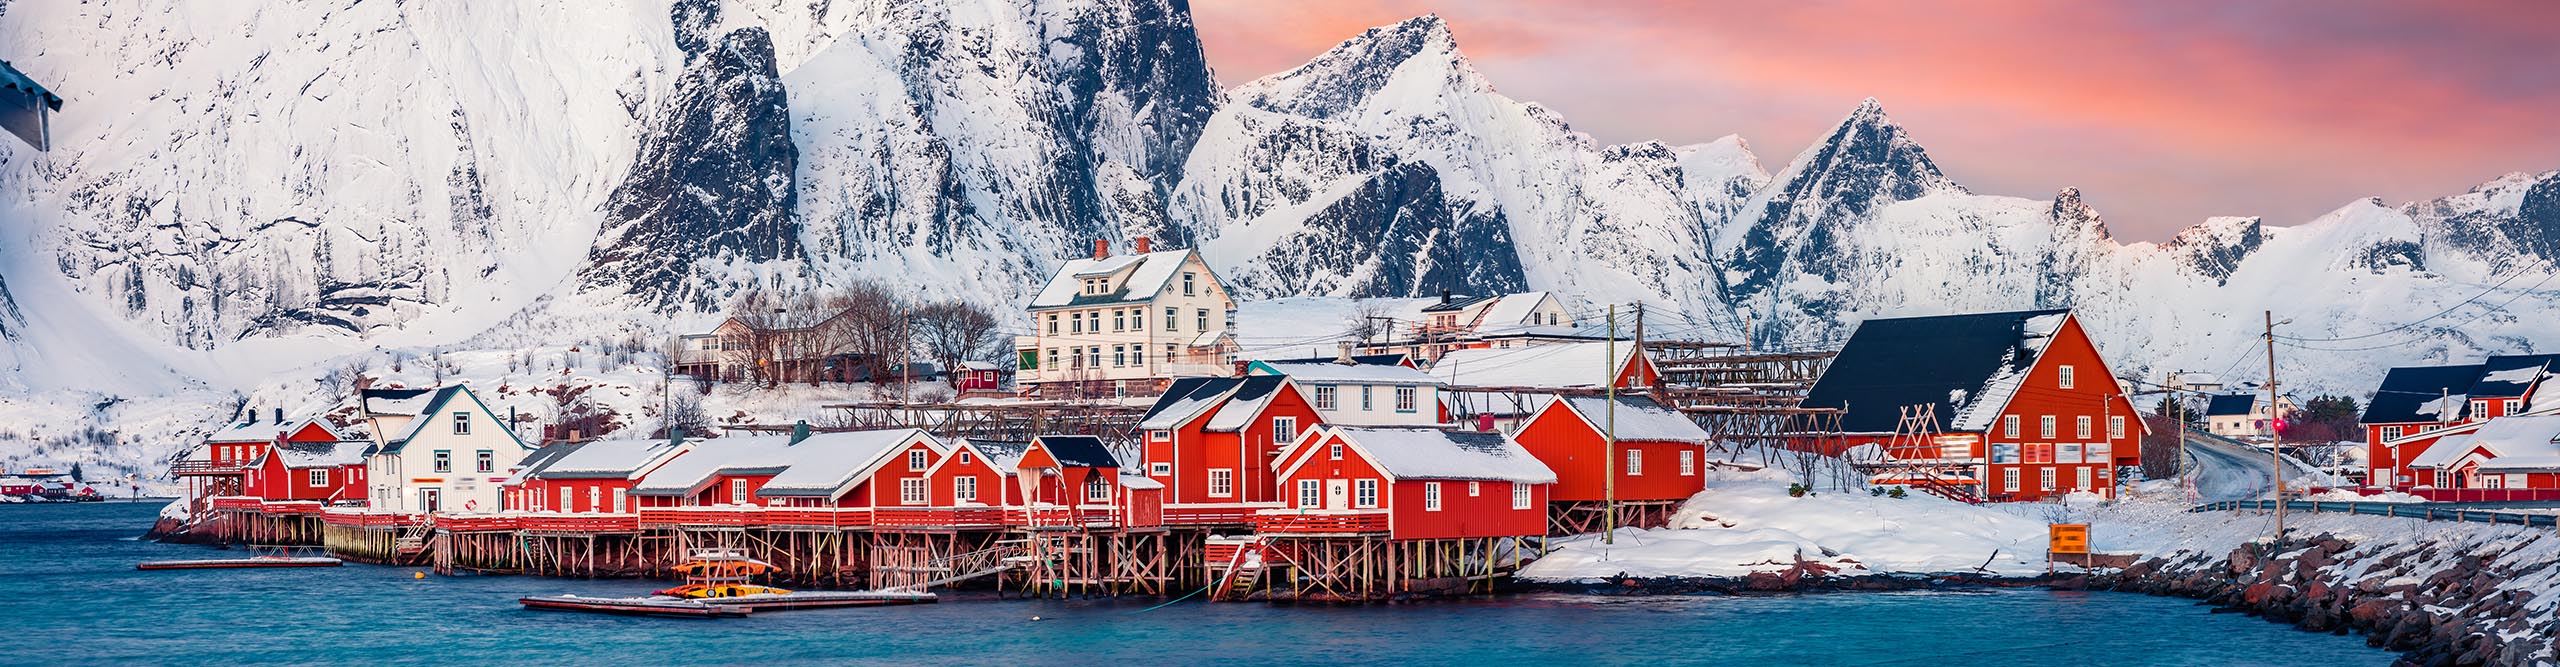 Colorful houses on the shore of Sakirisoy village, Lofoten Islands archipelago, Norwegian sea